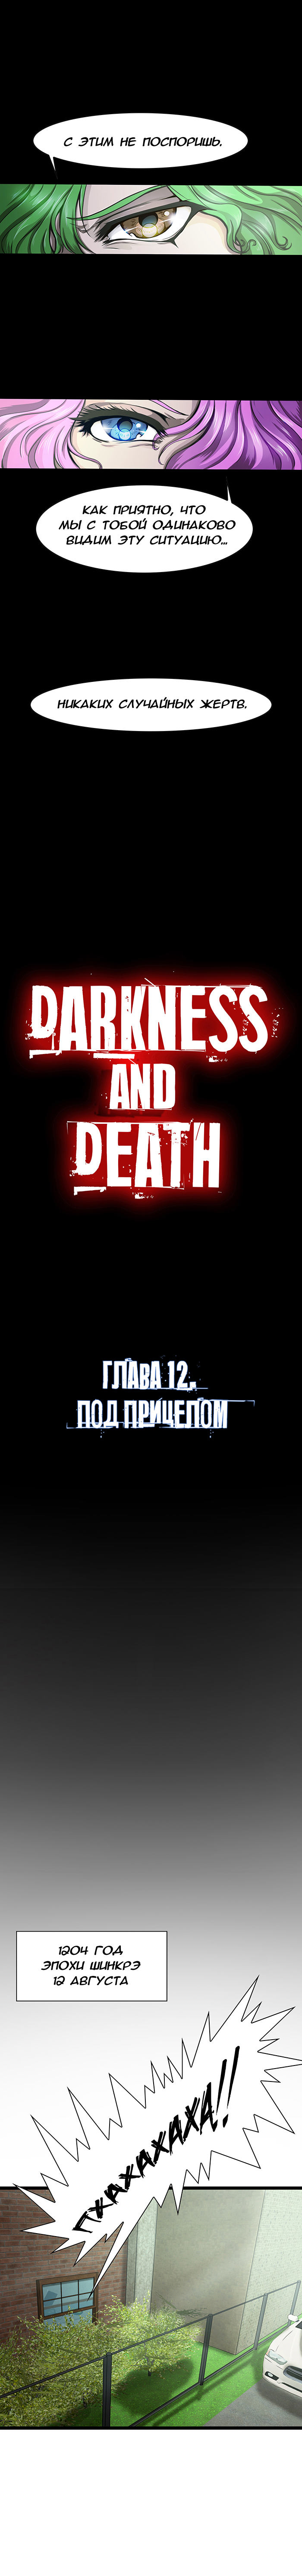 Комикс Darkness and Death: выпуск №179